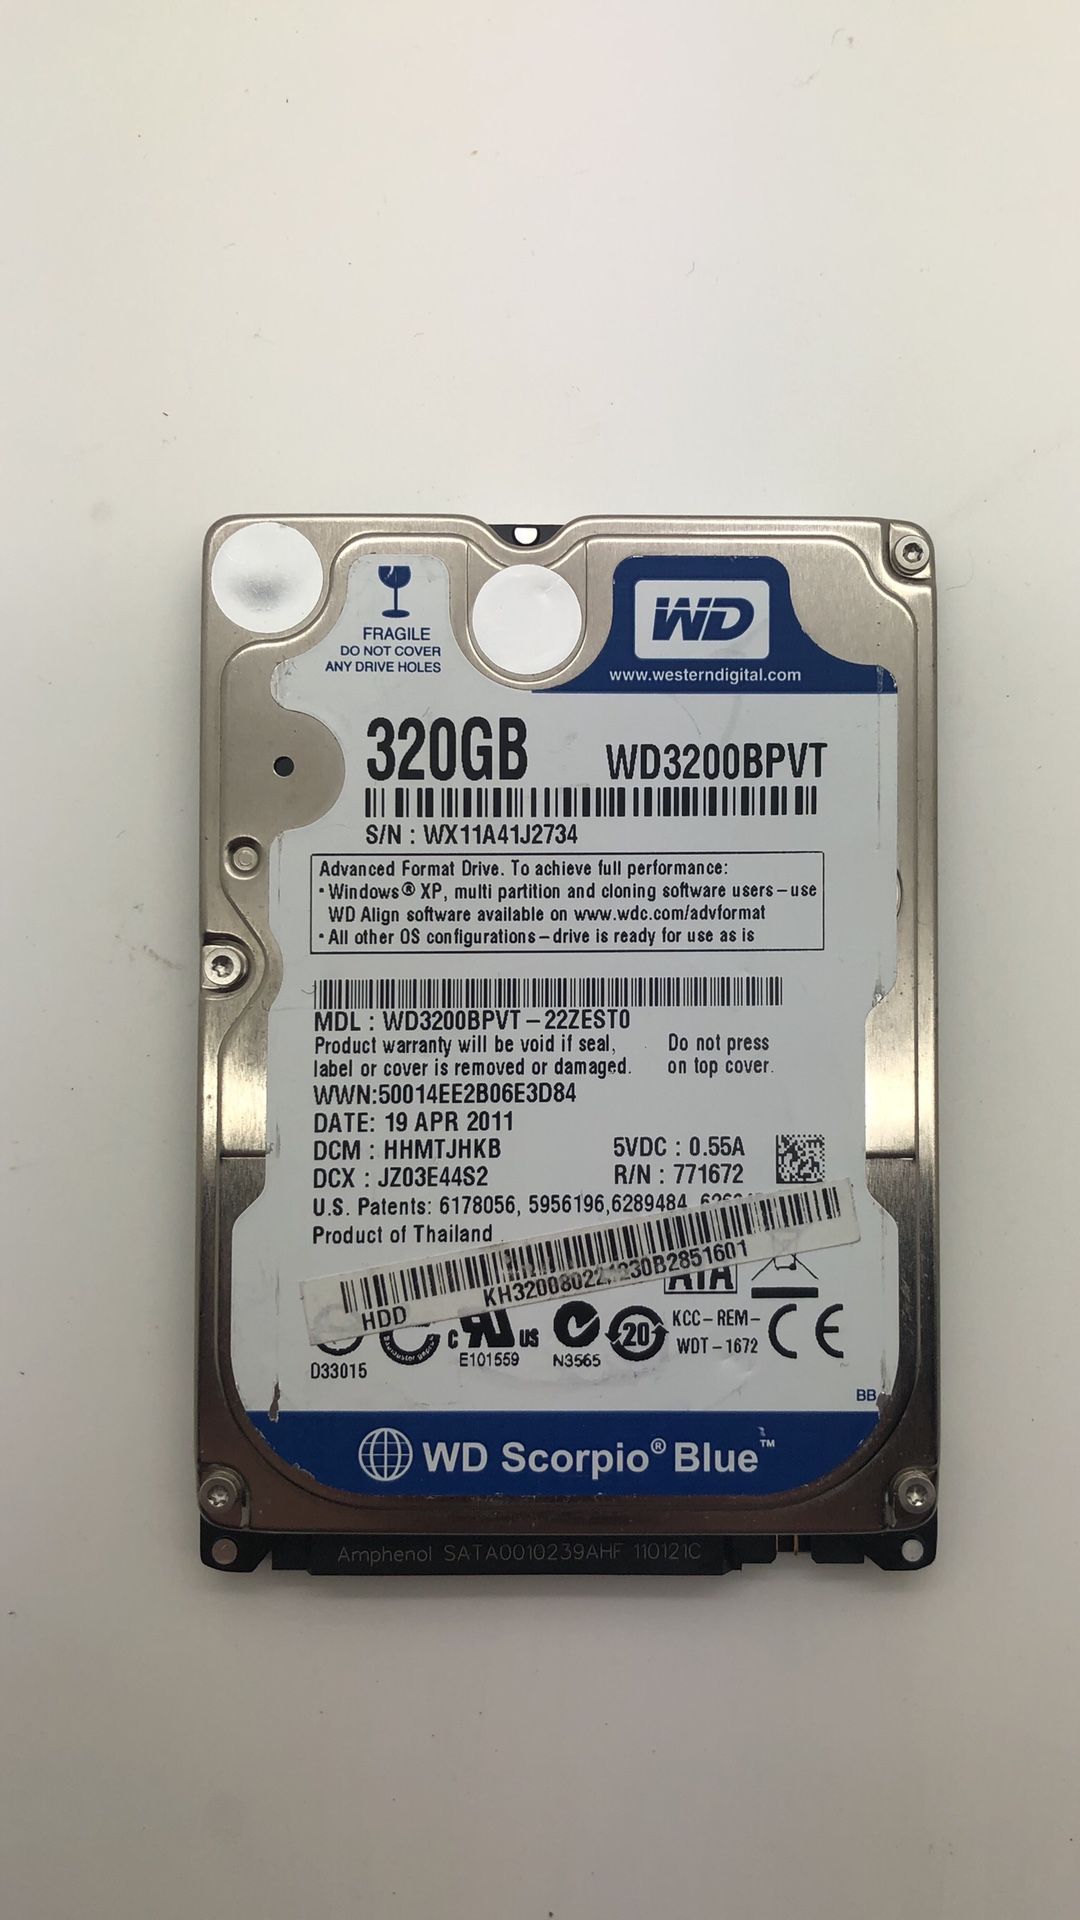 Western Digital WD3200BPVT-22ZEST0 - 320GB Hard Disk Drive HDD with bracket